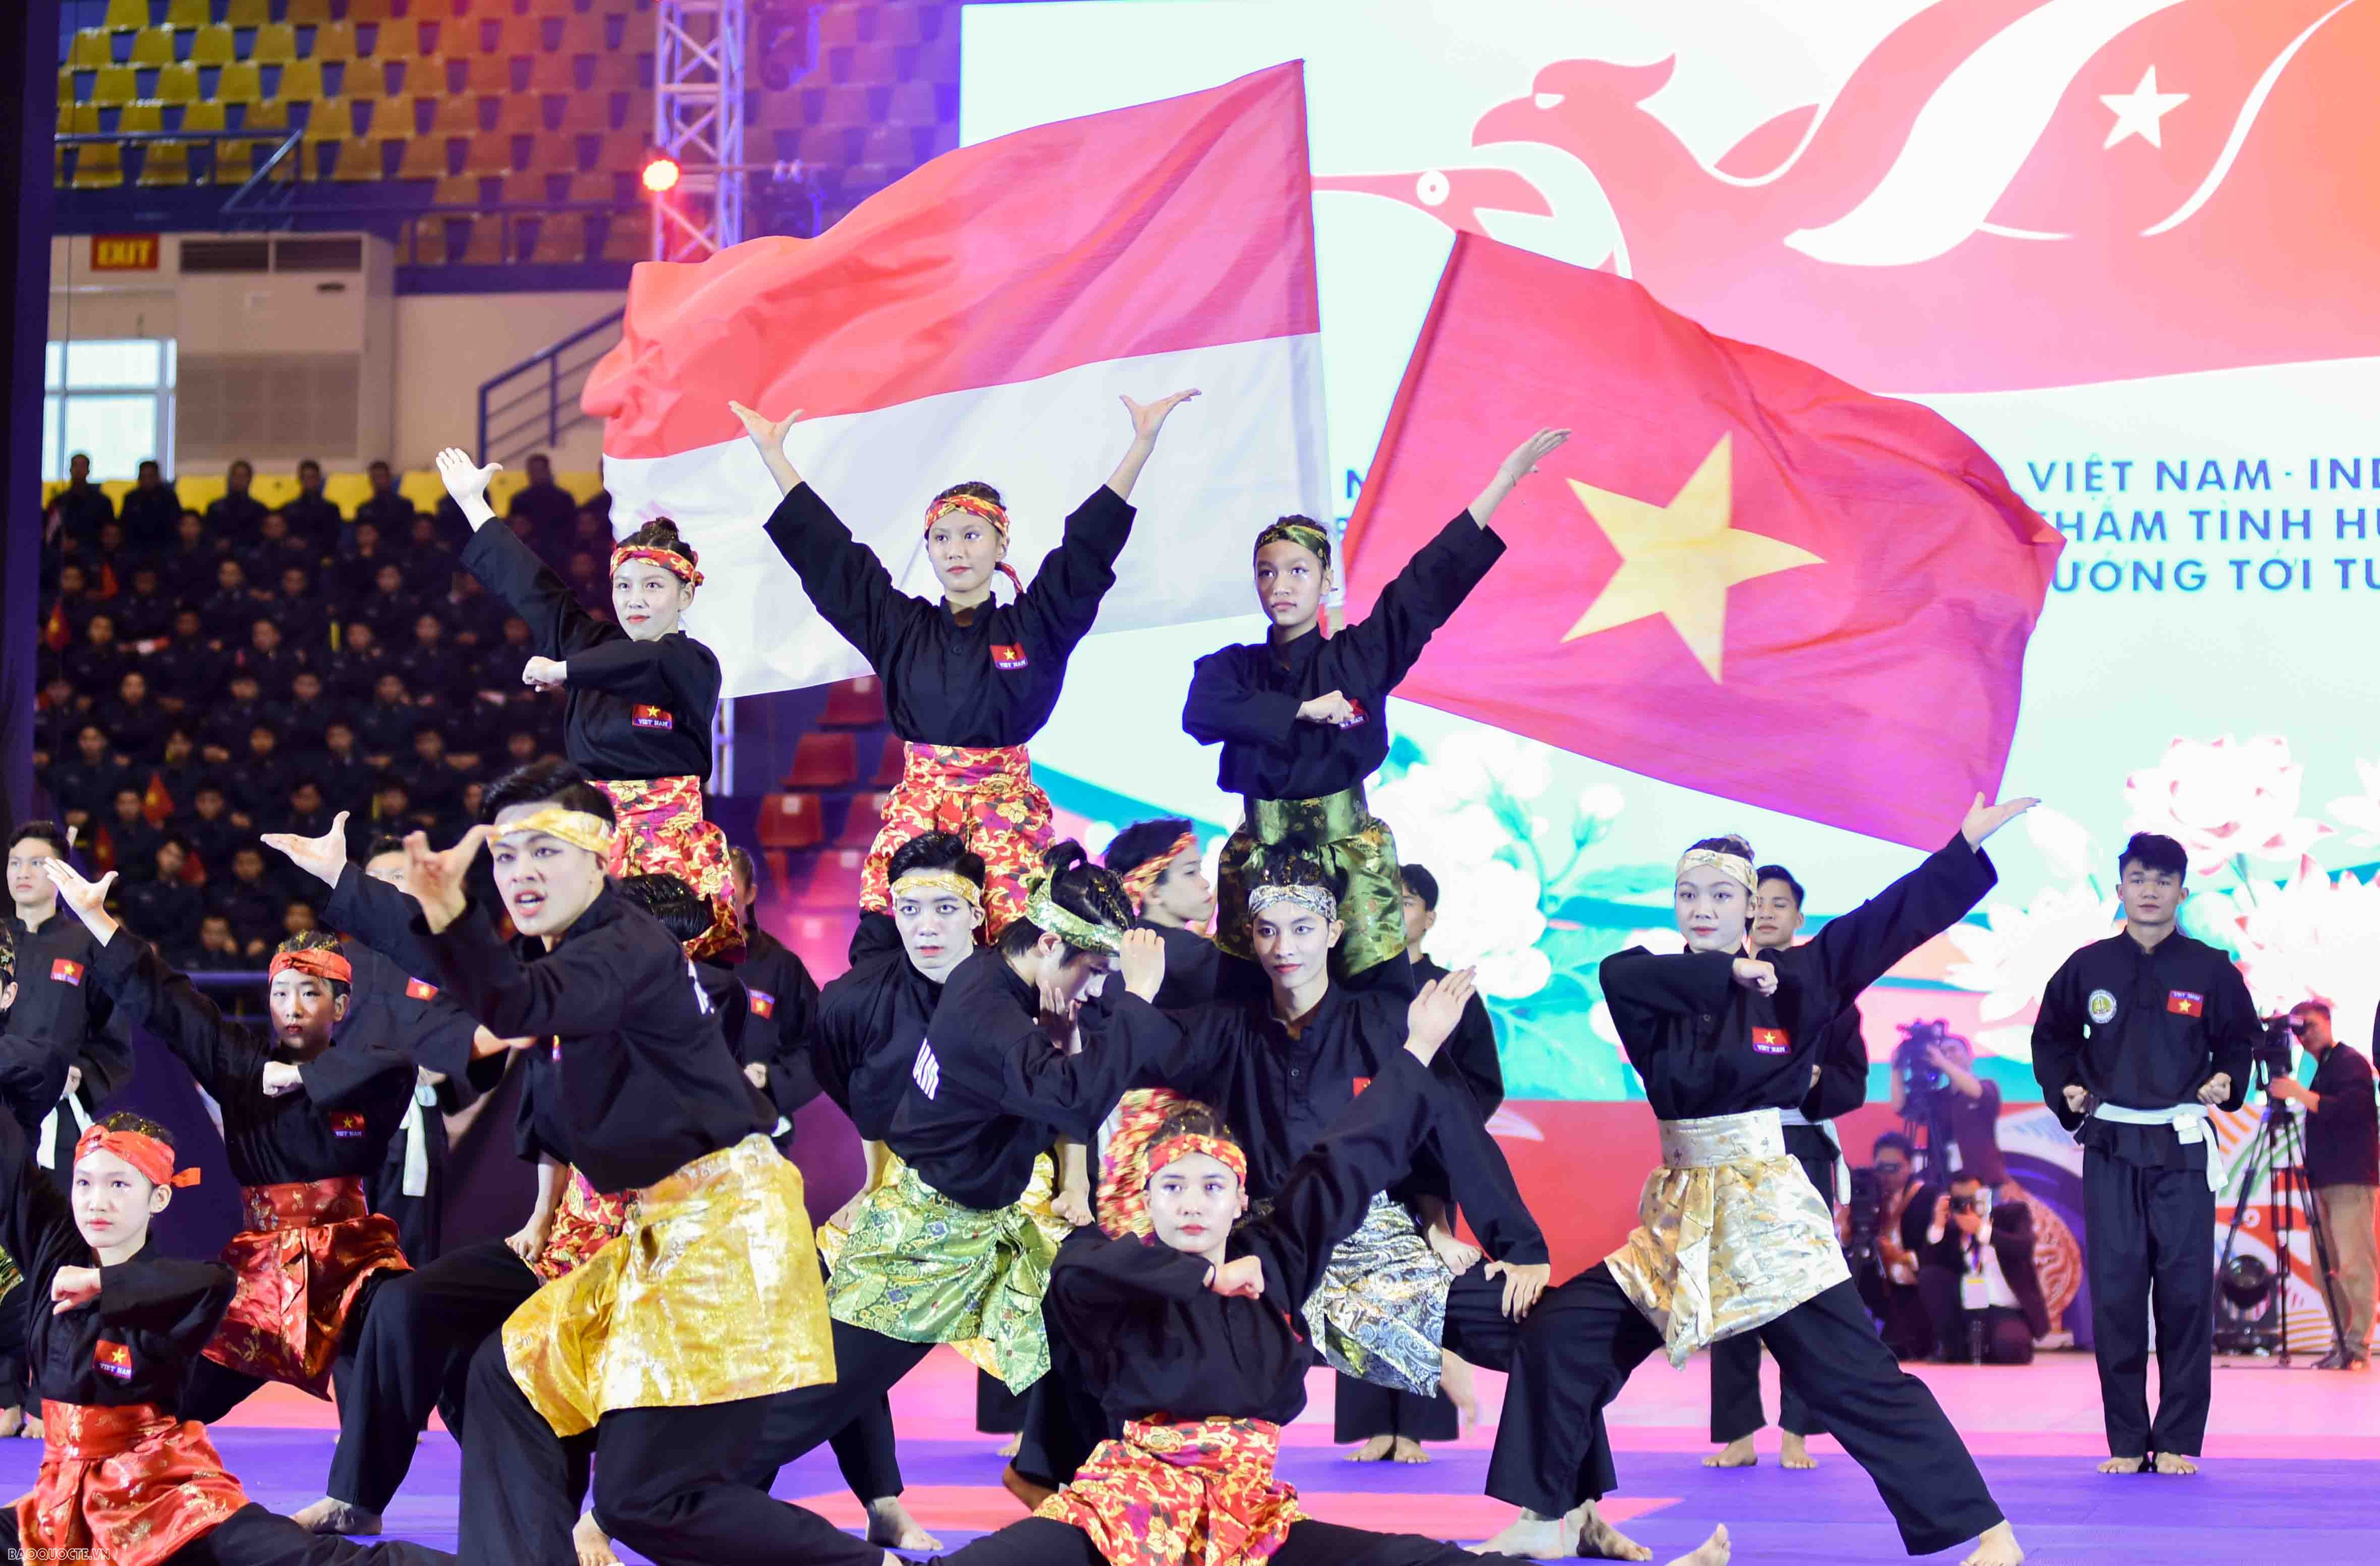 Presidents of Vietnam, Indonesia enjoy martial arts performances